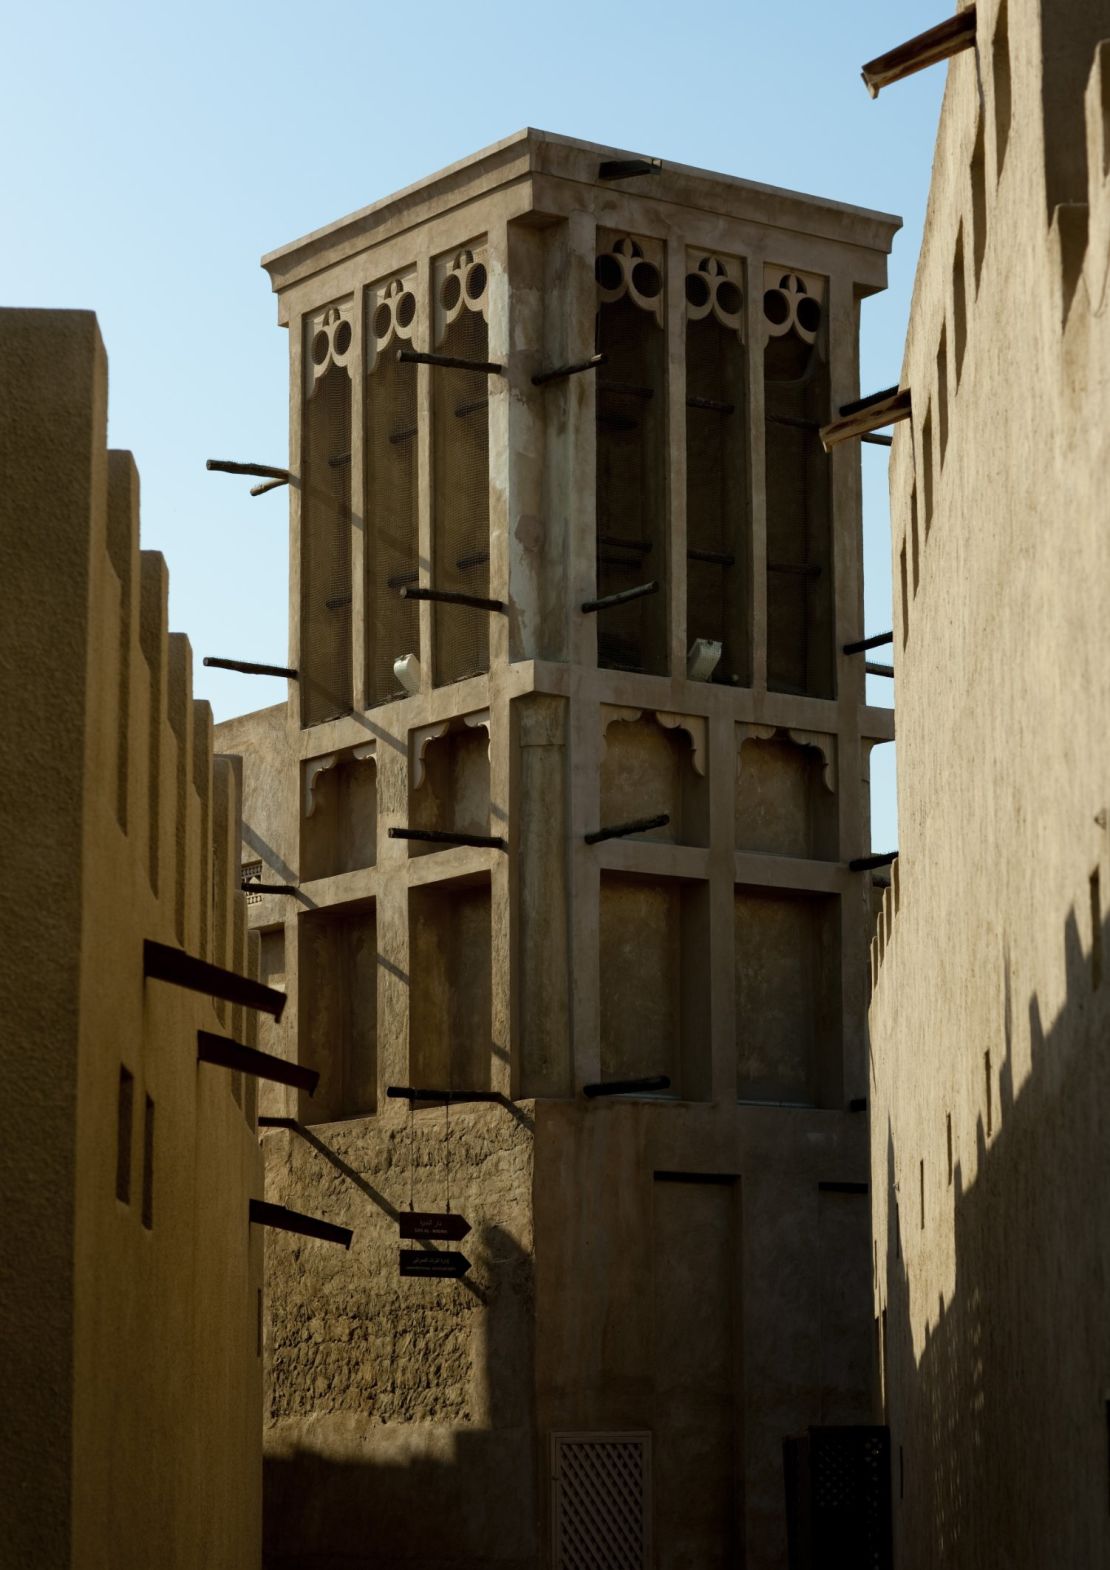 A traditional wind tower in Dubai's Al Bastakiya area.